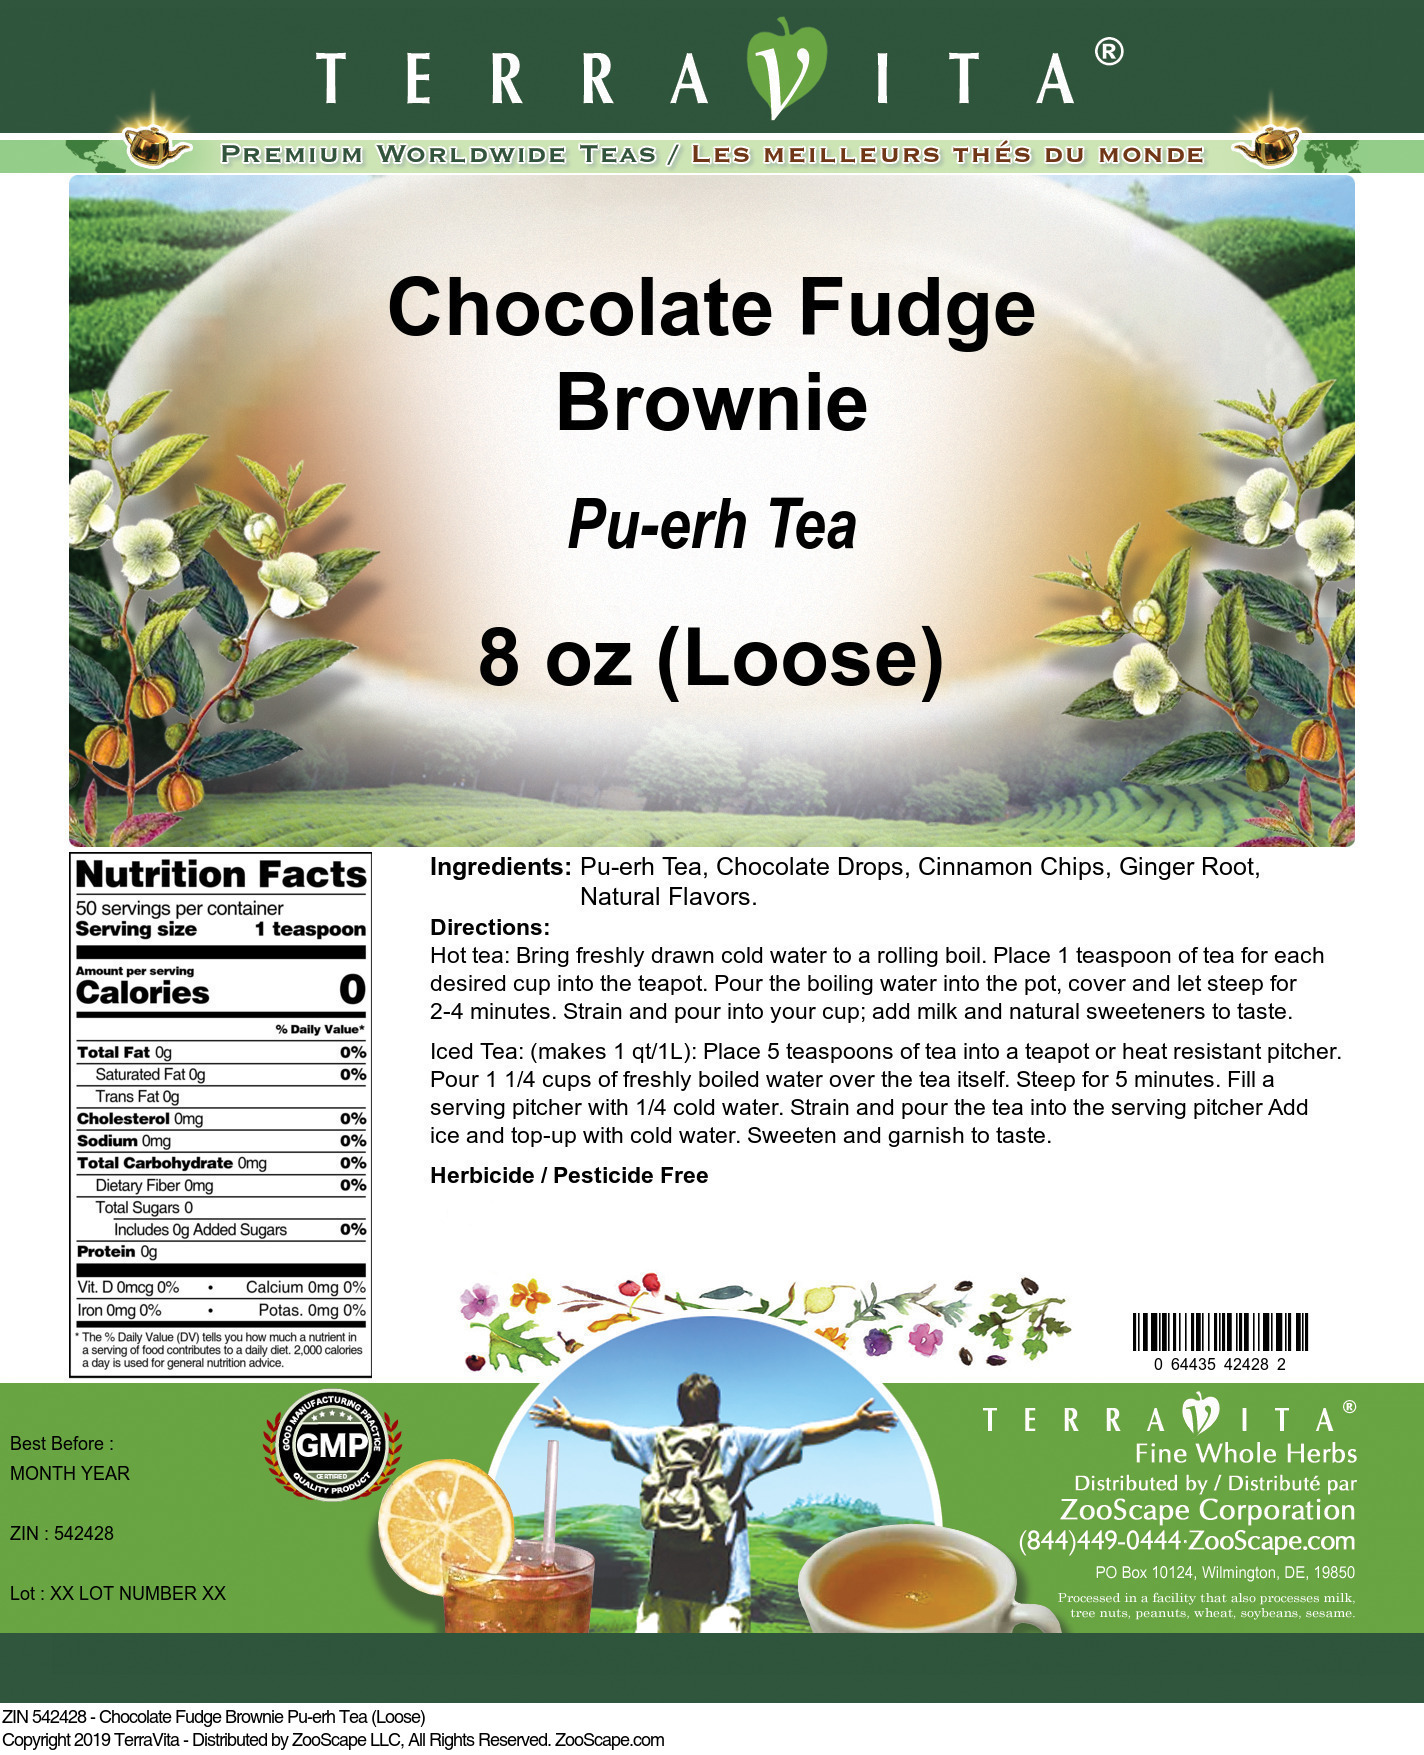 Chocolate Fudge Brownie Pu-erh Tea (Loose) - Label